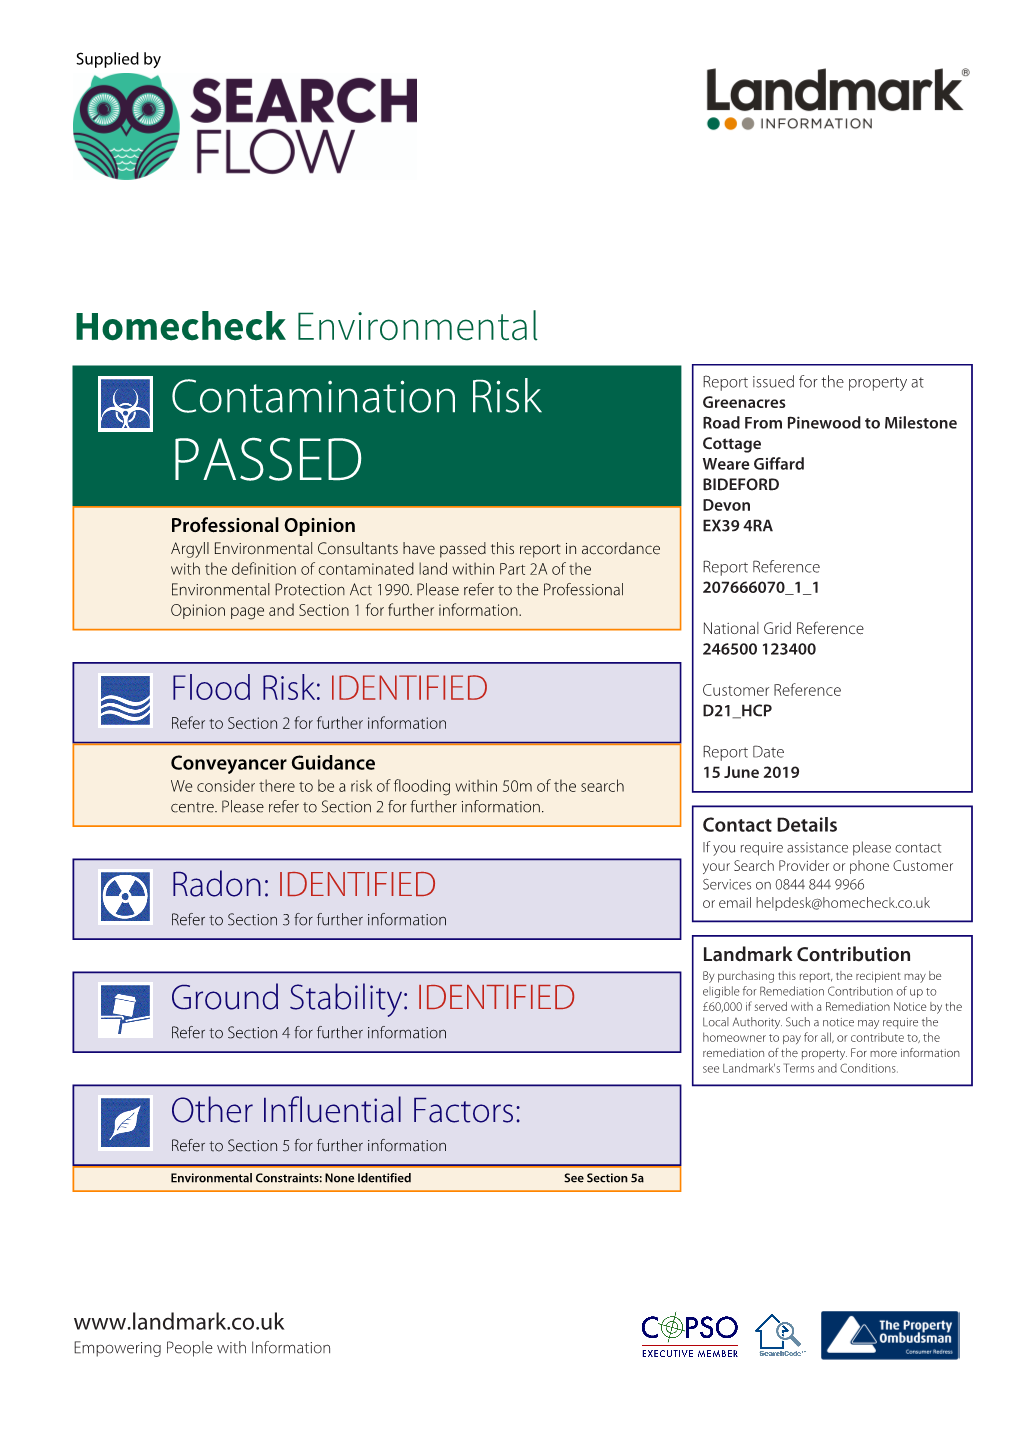 Contamination Risk